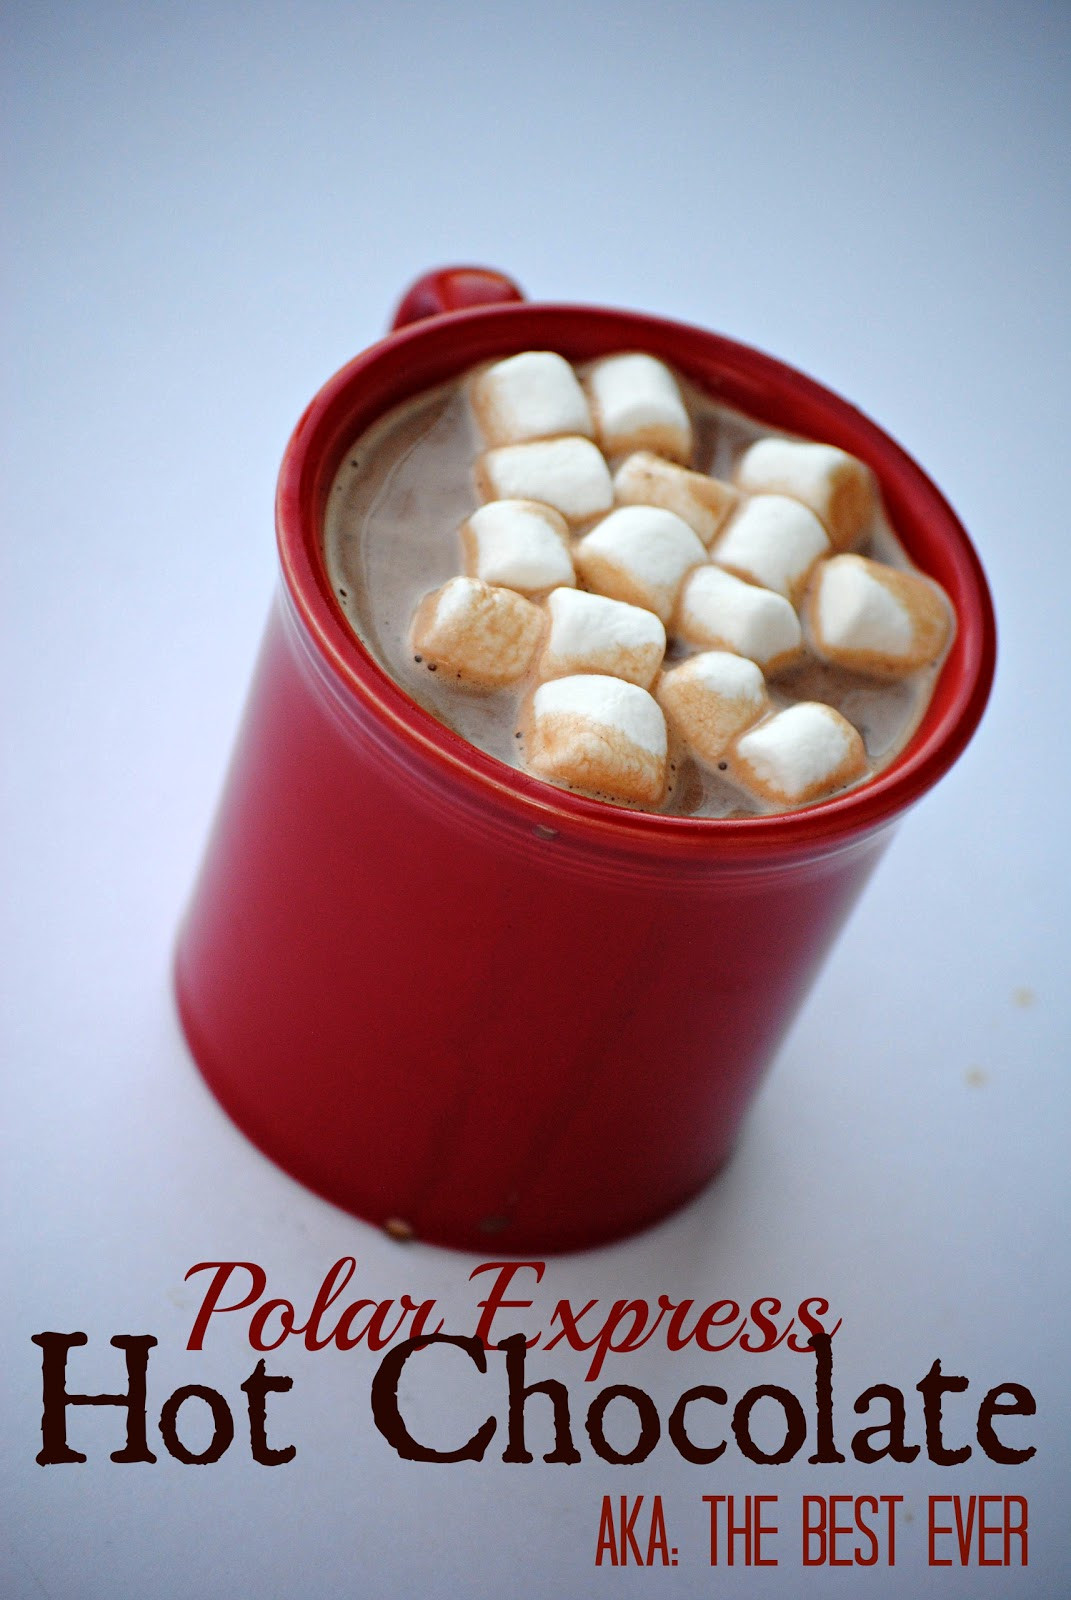 Polar Express Hot Chocolate
 The Farm Girl Recipes Polar Express Hot Chocolate aka